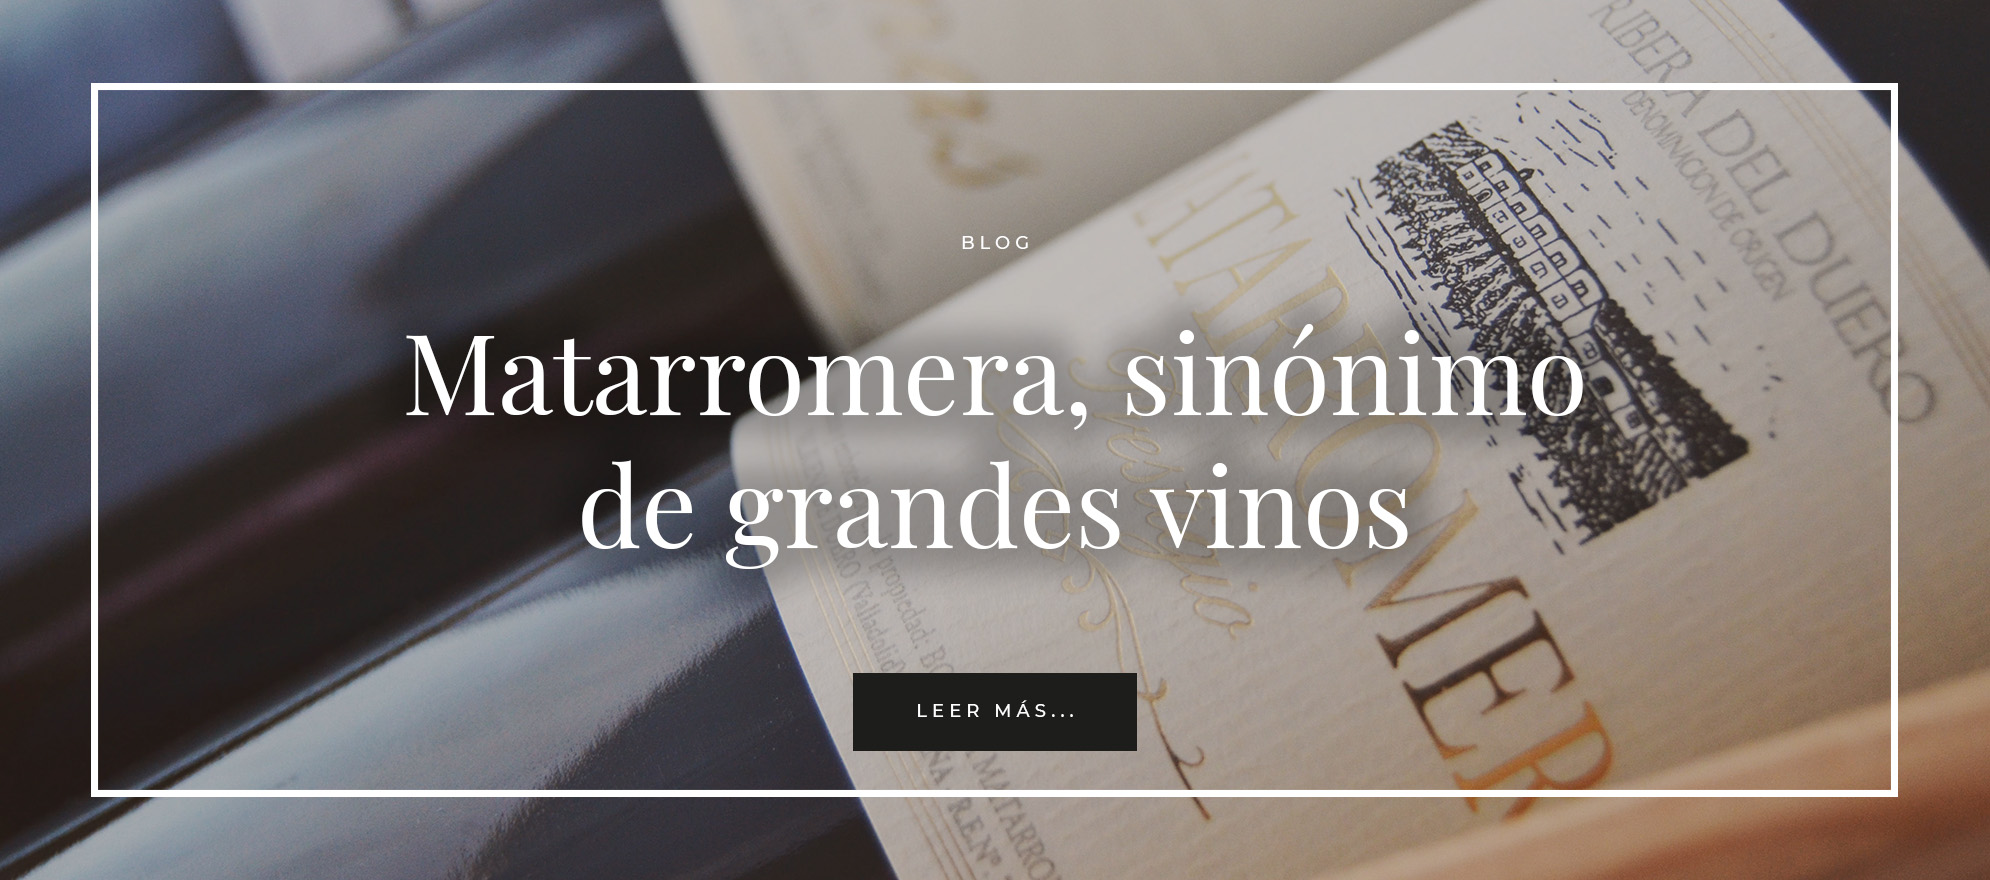 Matarromera, sinonimo de grandes vinos